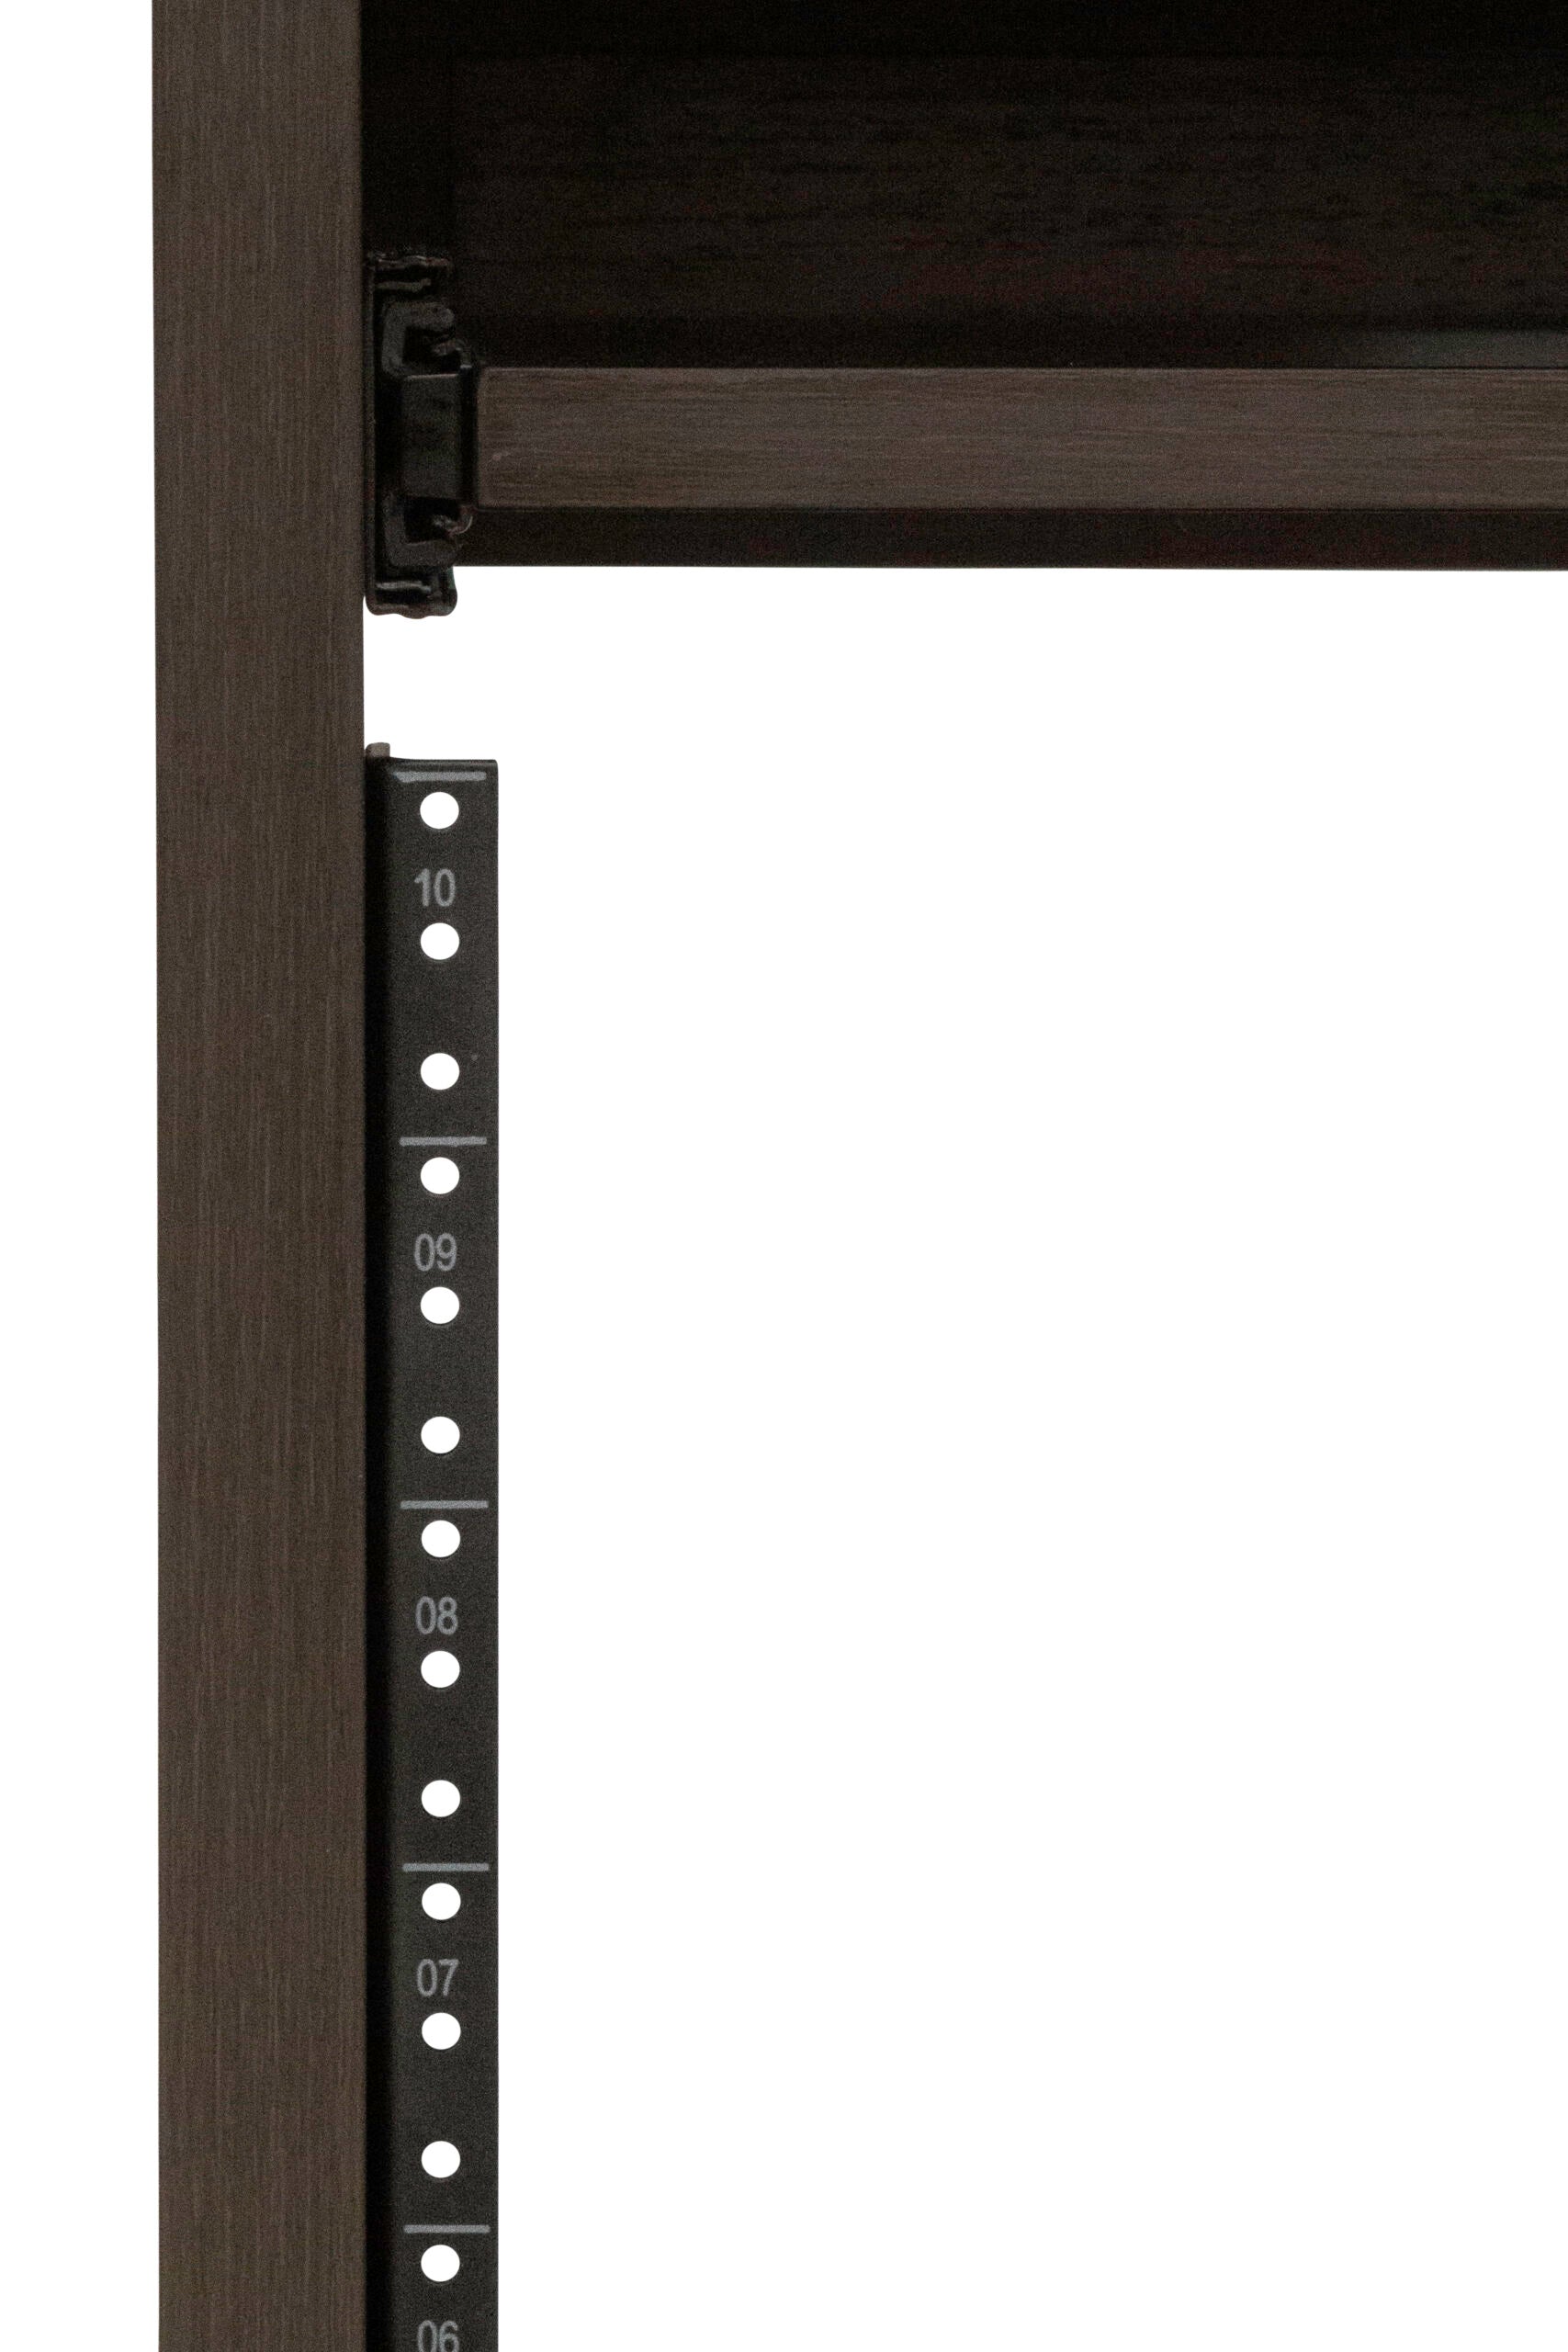 Gator Frameworks | Elite Series Furniture Desk 10U Rack - BRN